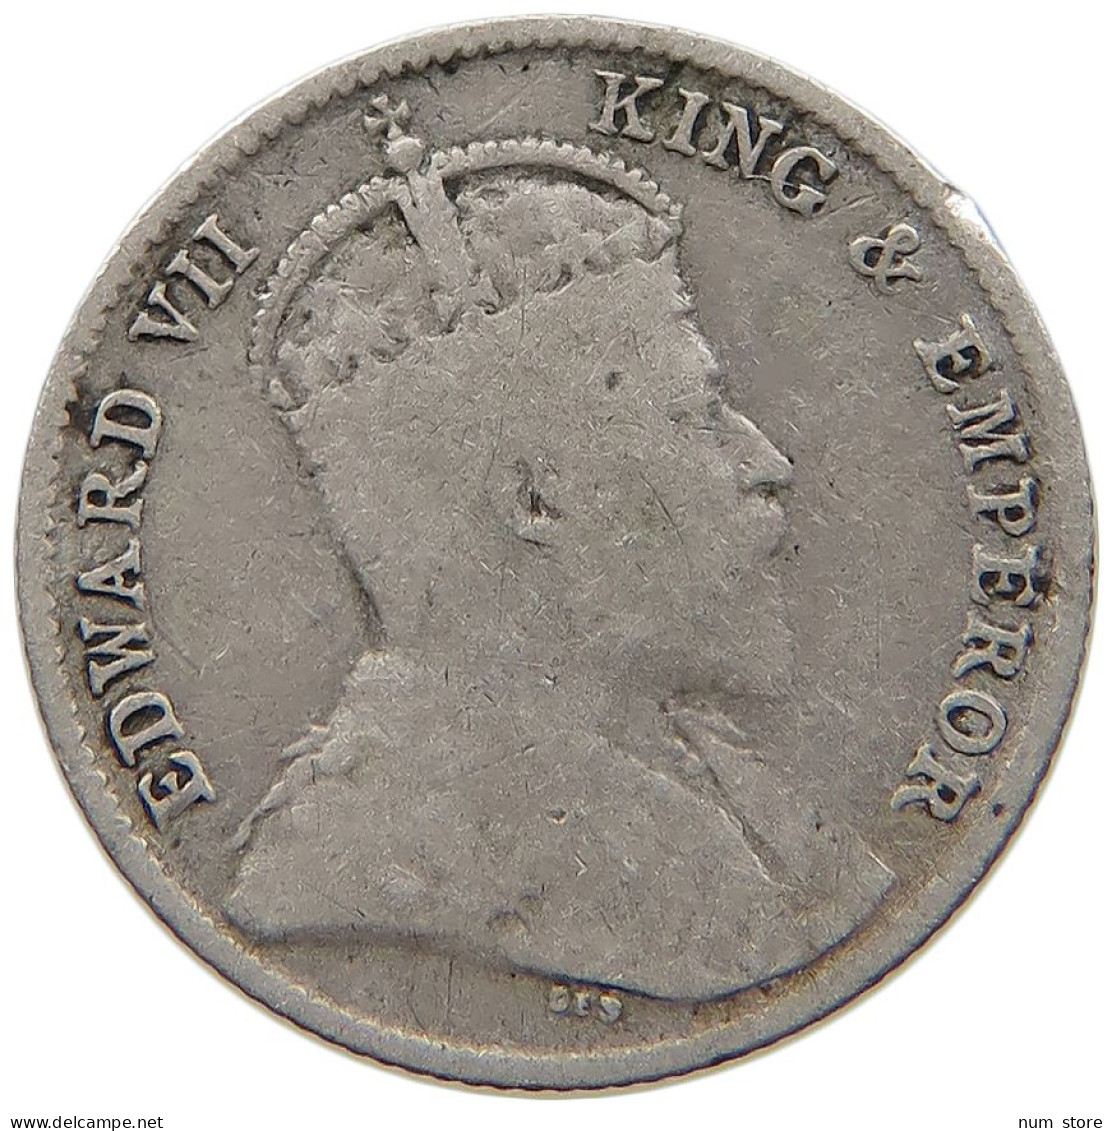 CEYLON 10 CENTS 1909 Edward VII., 1901 - 1910 #c010 0473 - Sri Lanka